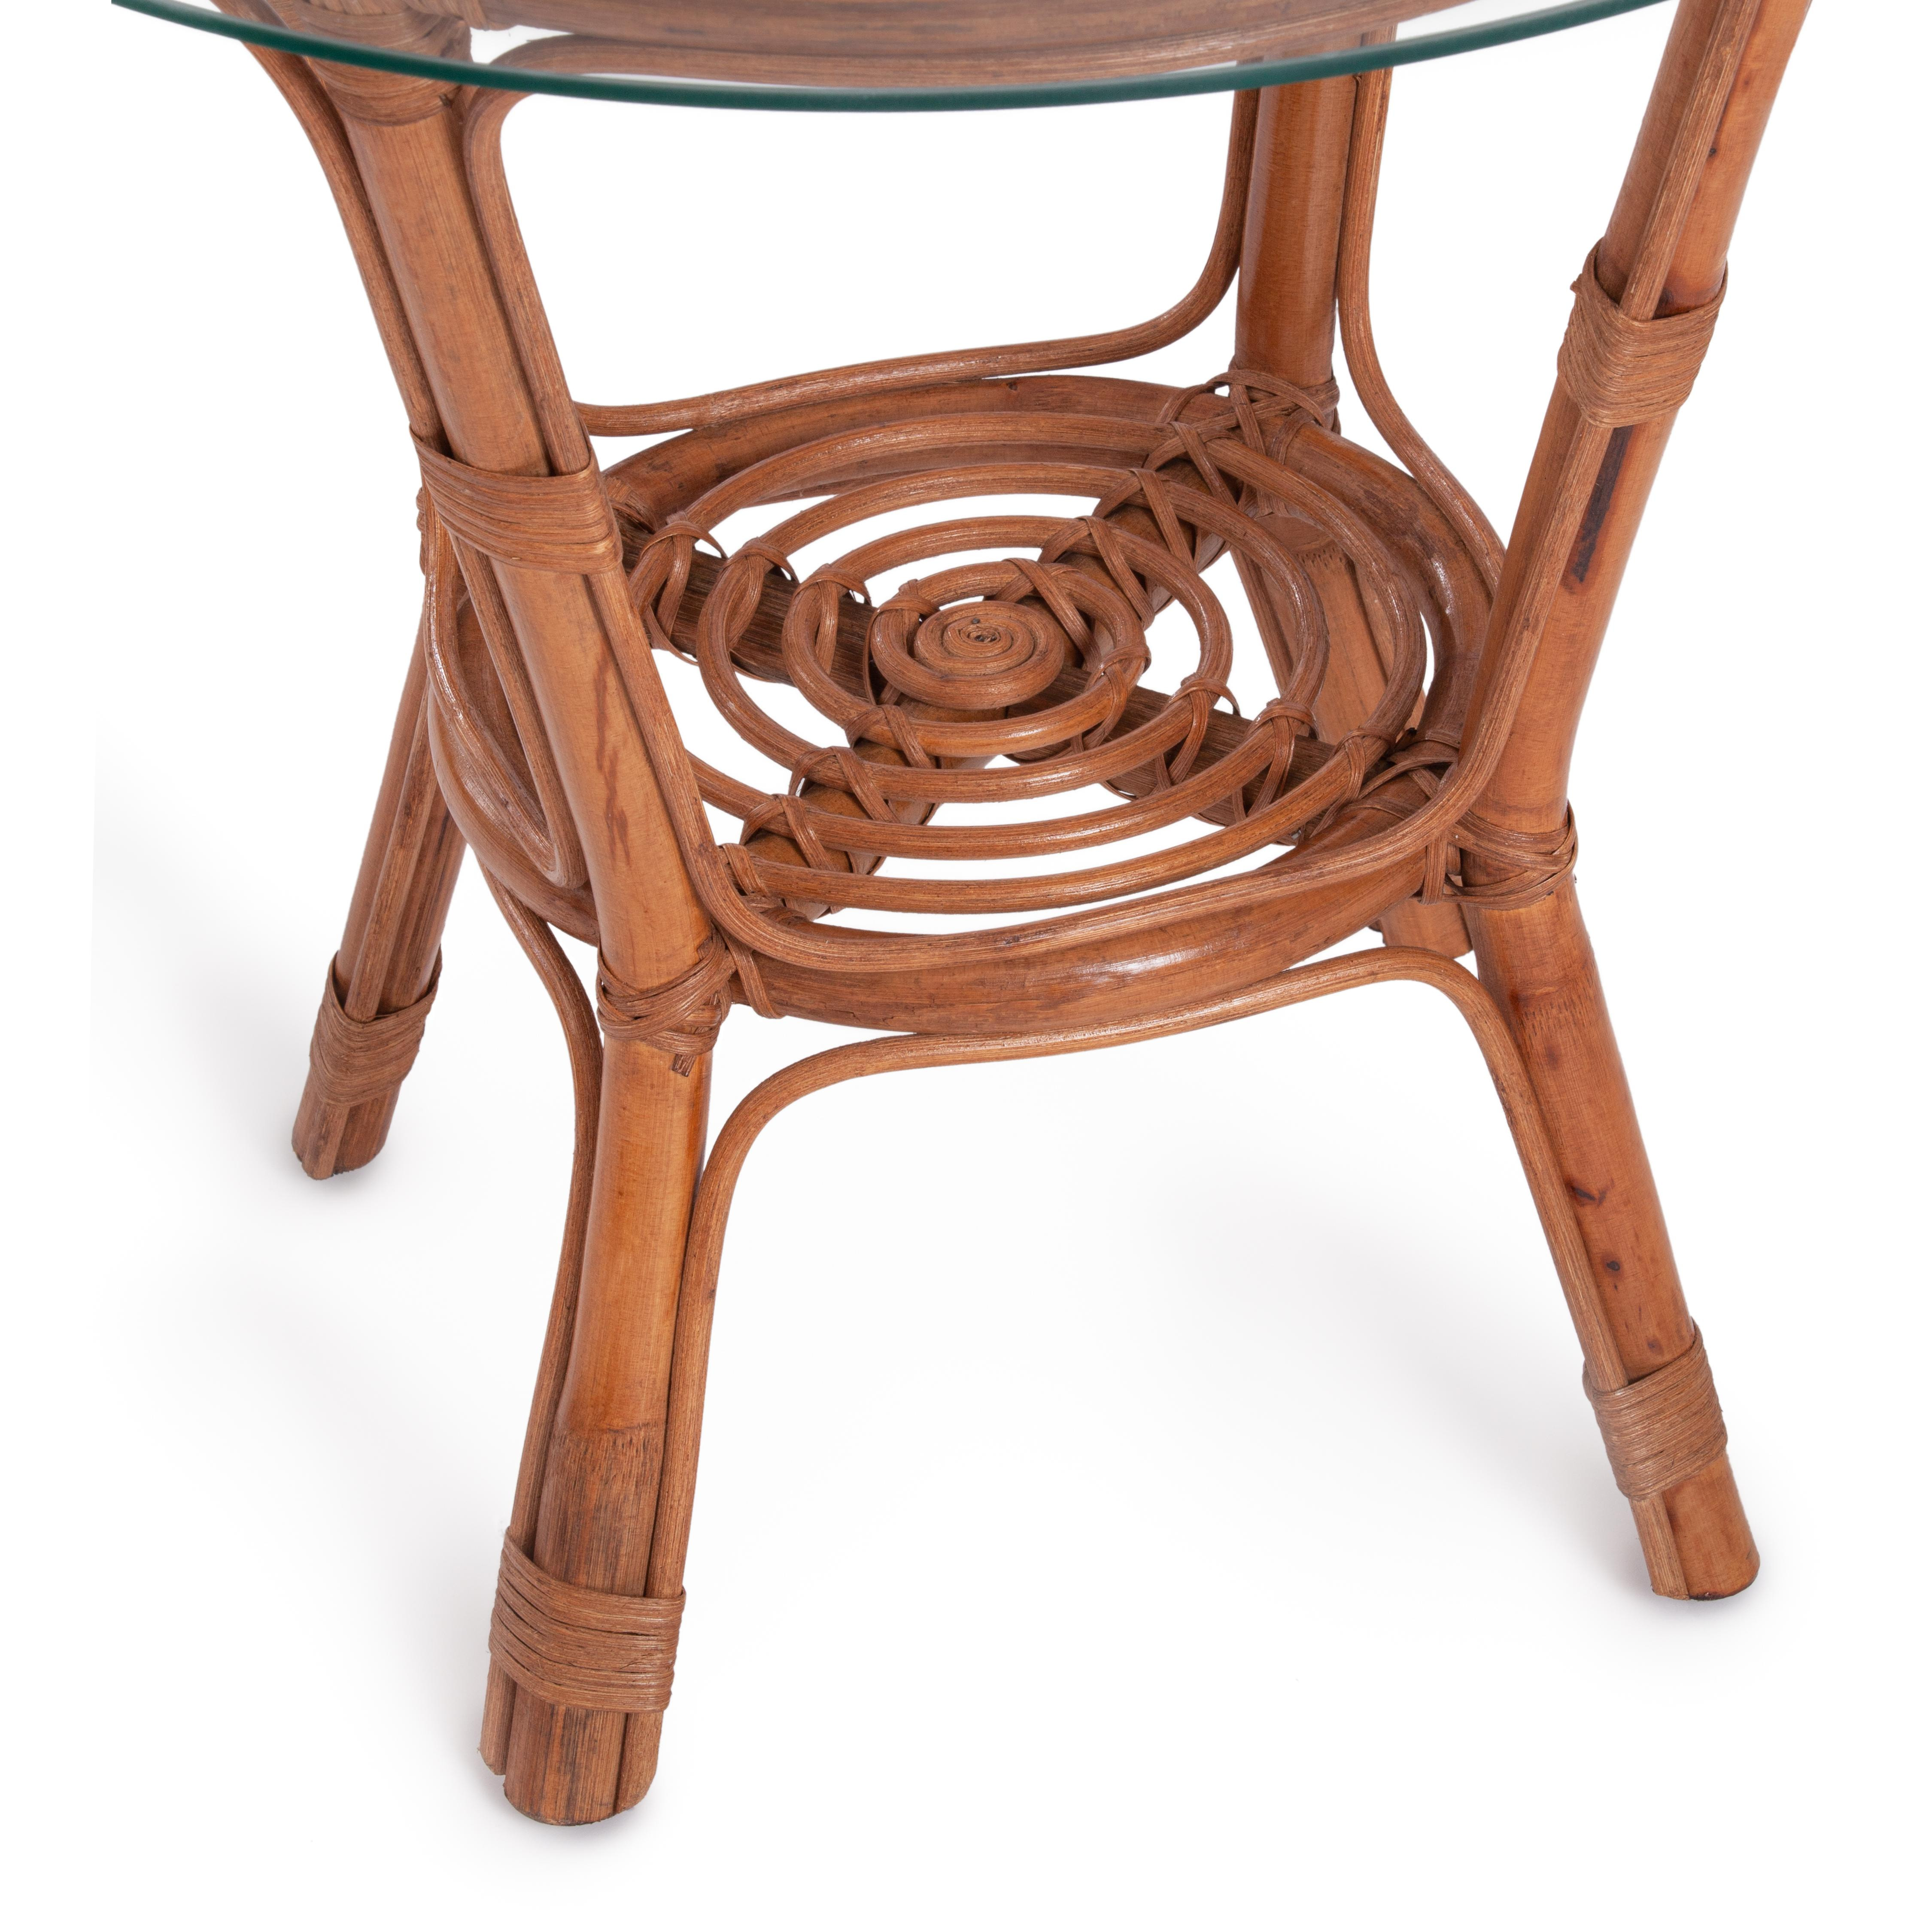 Комплект для отдыха TURKEY (стол круглый (со стеклом)+2 кресла + диван) /с подушками/ ротанг, кр:70х65х78см, дв:120х65х78см, ст:D50х56,5см, coco brown (коричневый кокос)